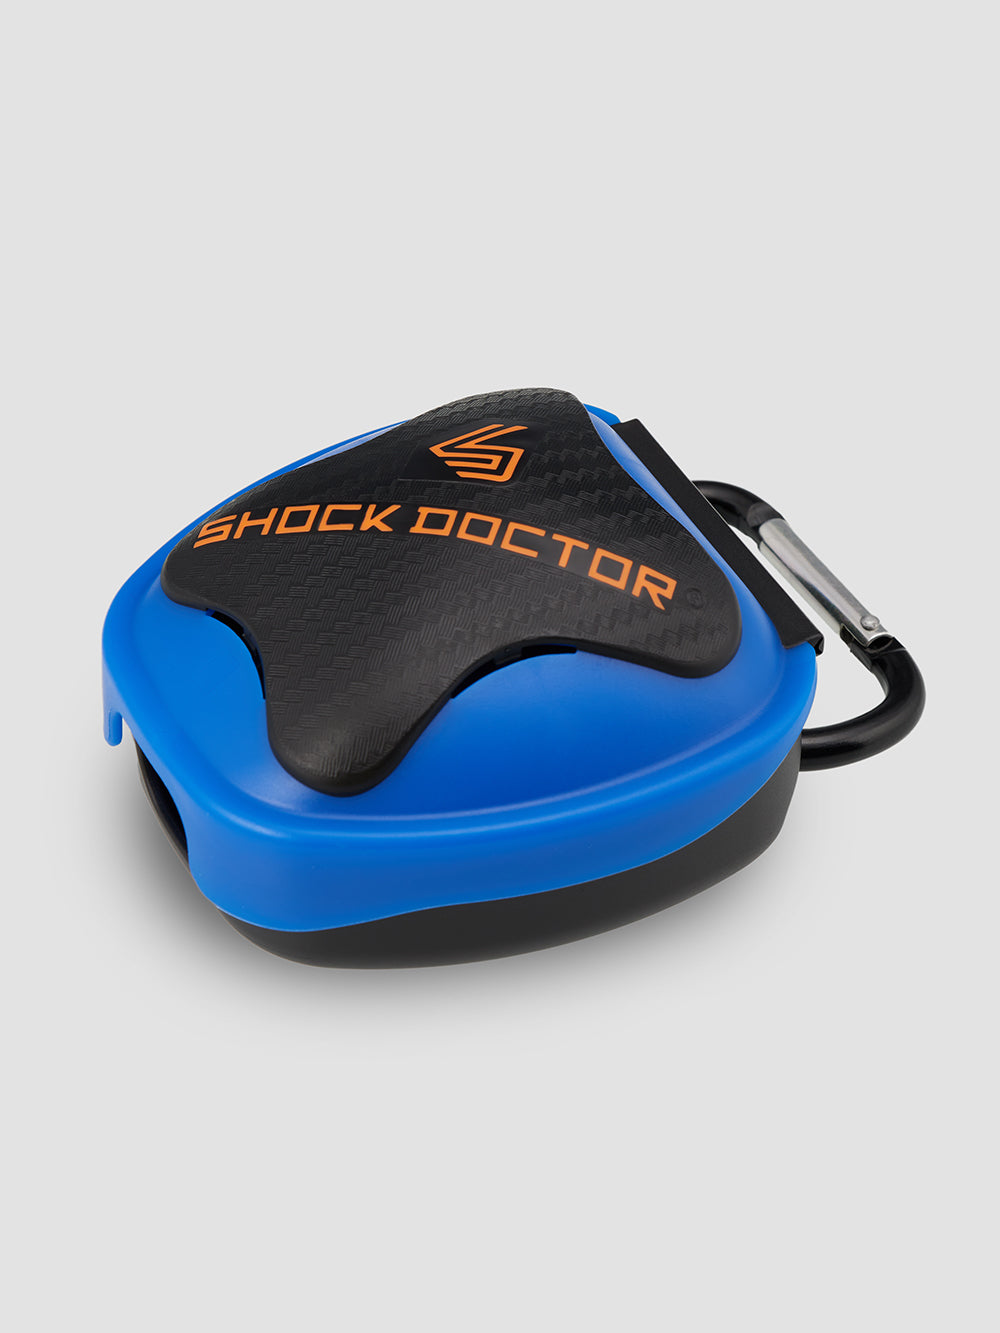 Shock Doctor Mouth Guard Case Blue/Black